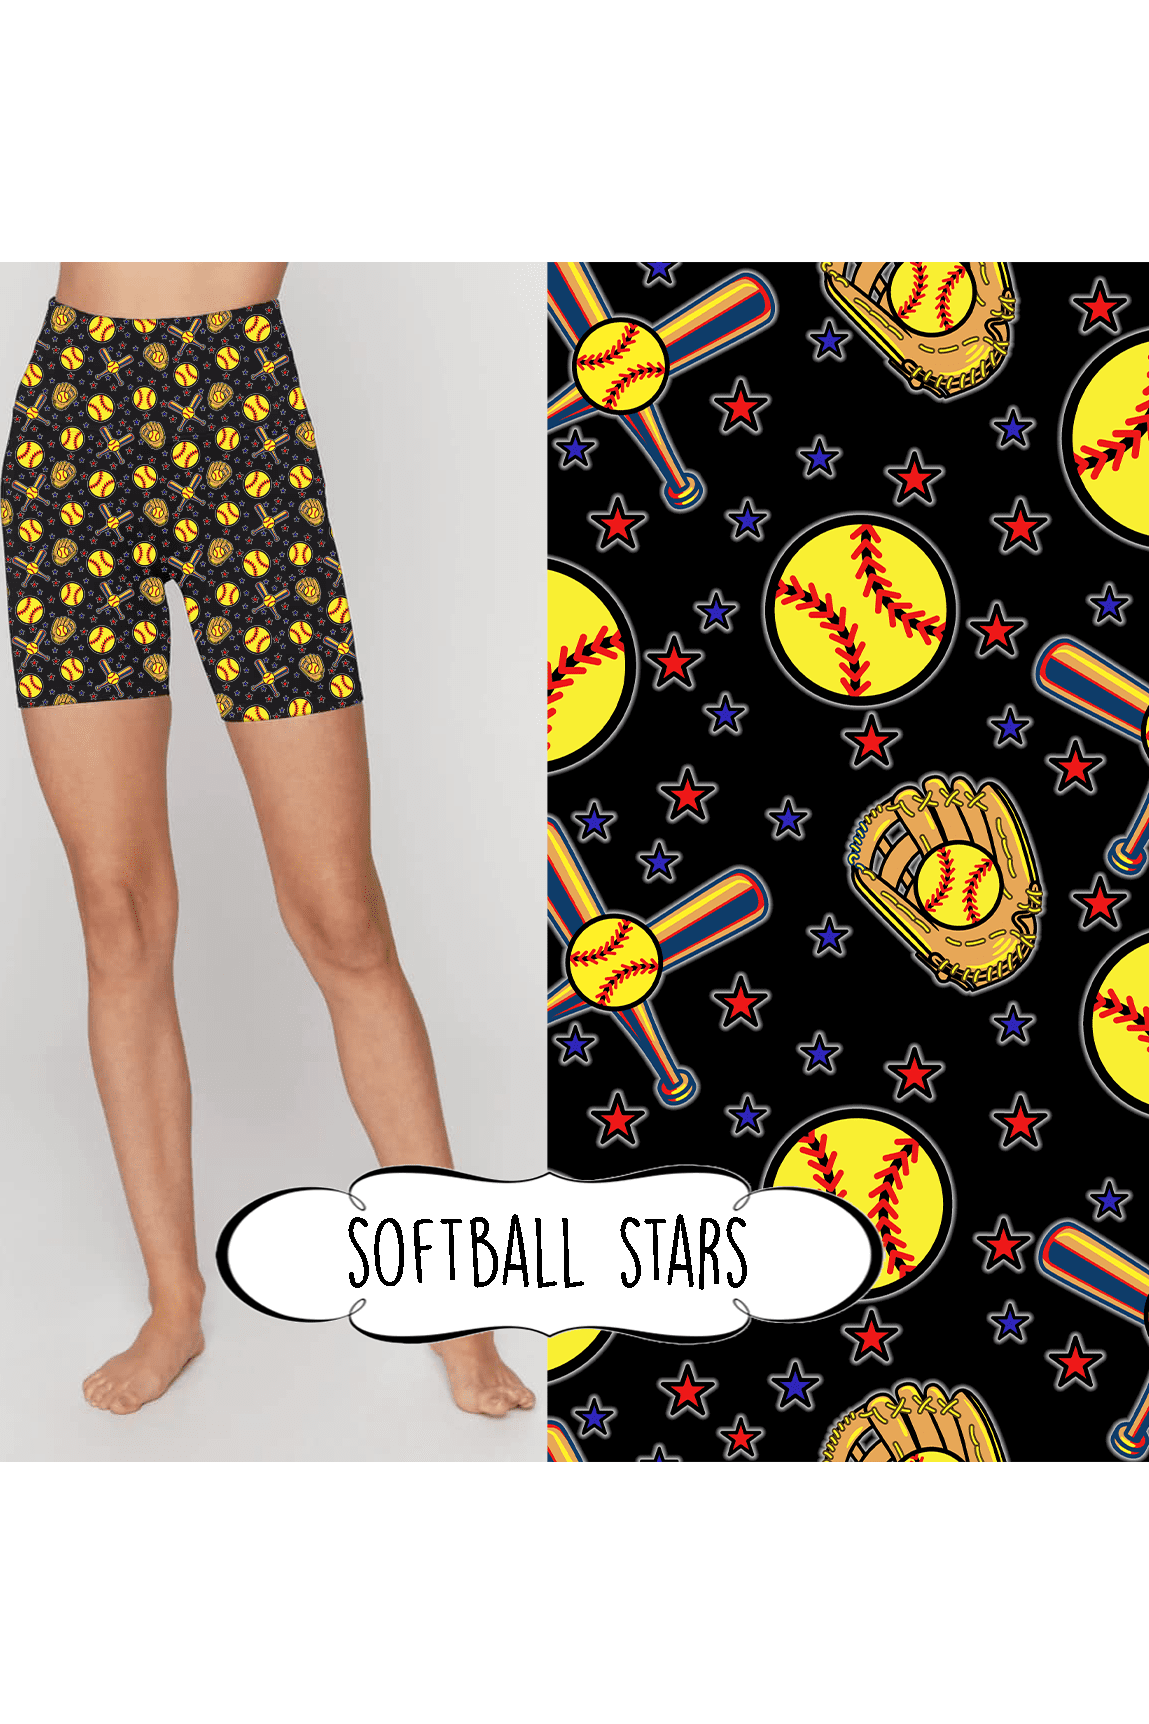 Softball Stars - Biker Shorts